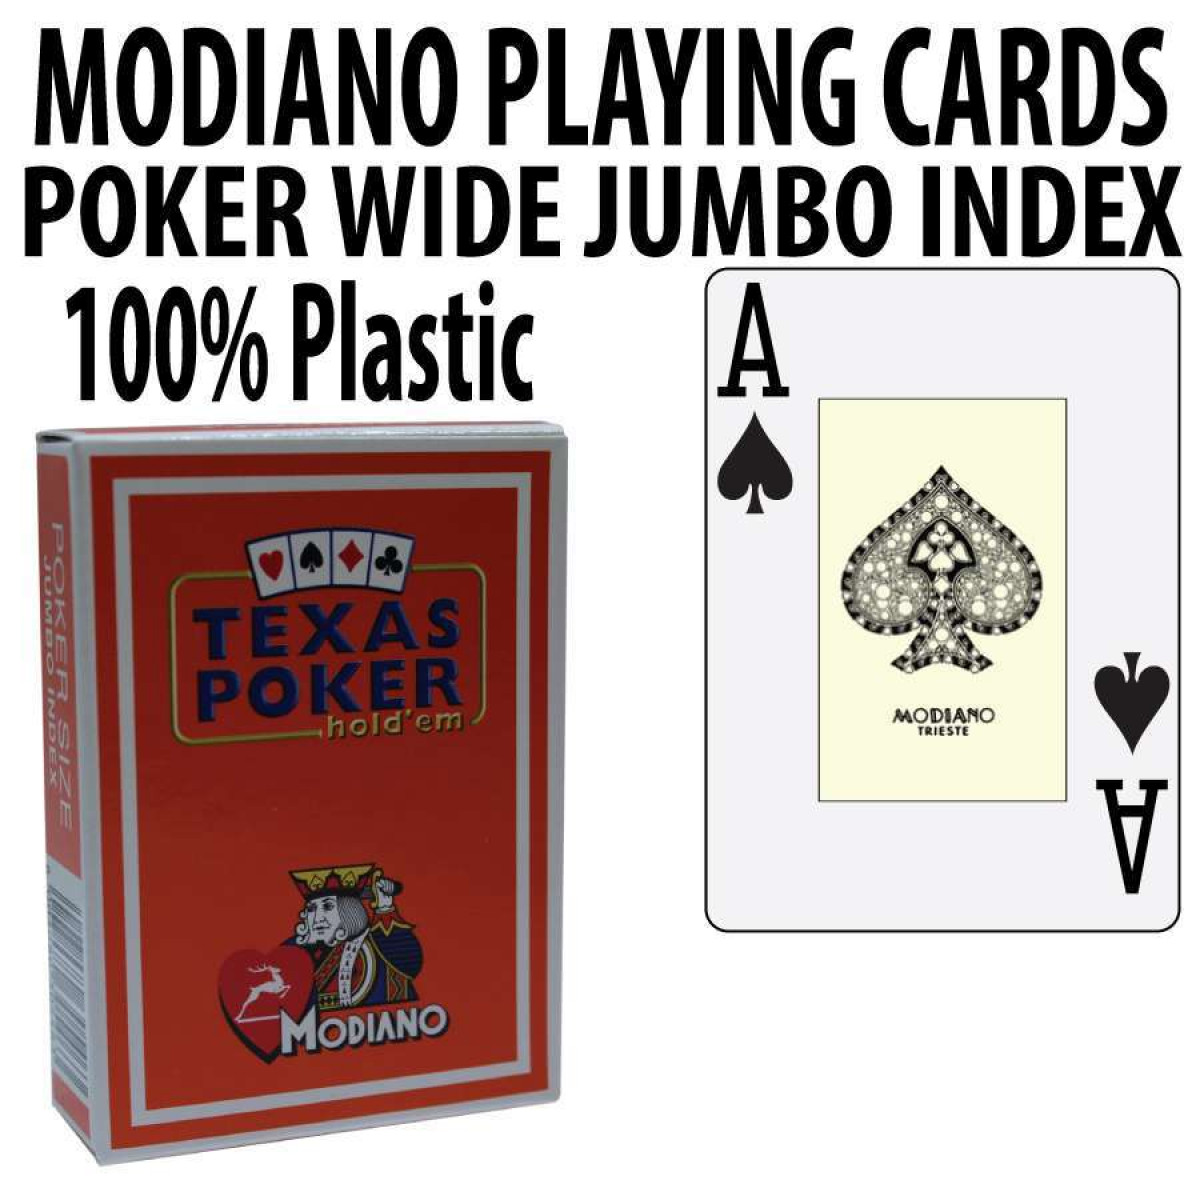 Modiano Texas Poker Holdem 100% Plastic Playing Cards Poker Wide Size Jumbo Index 